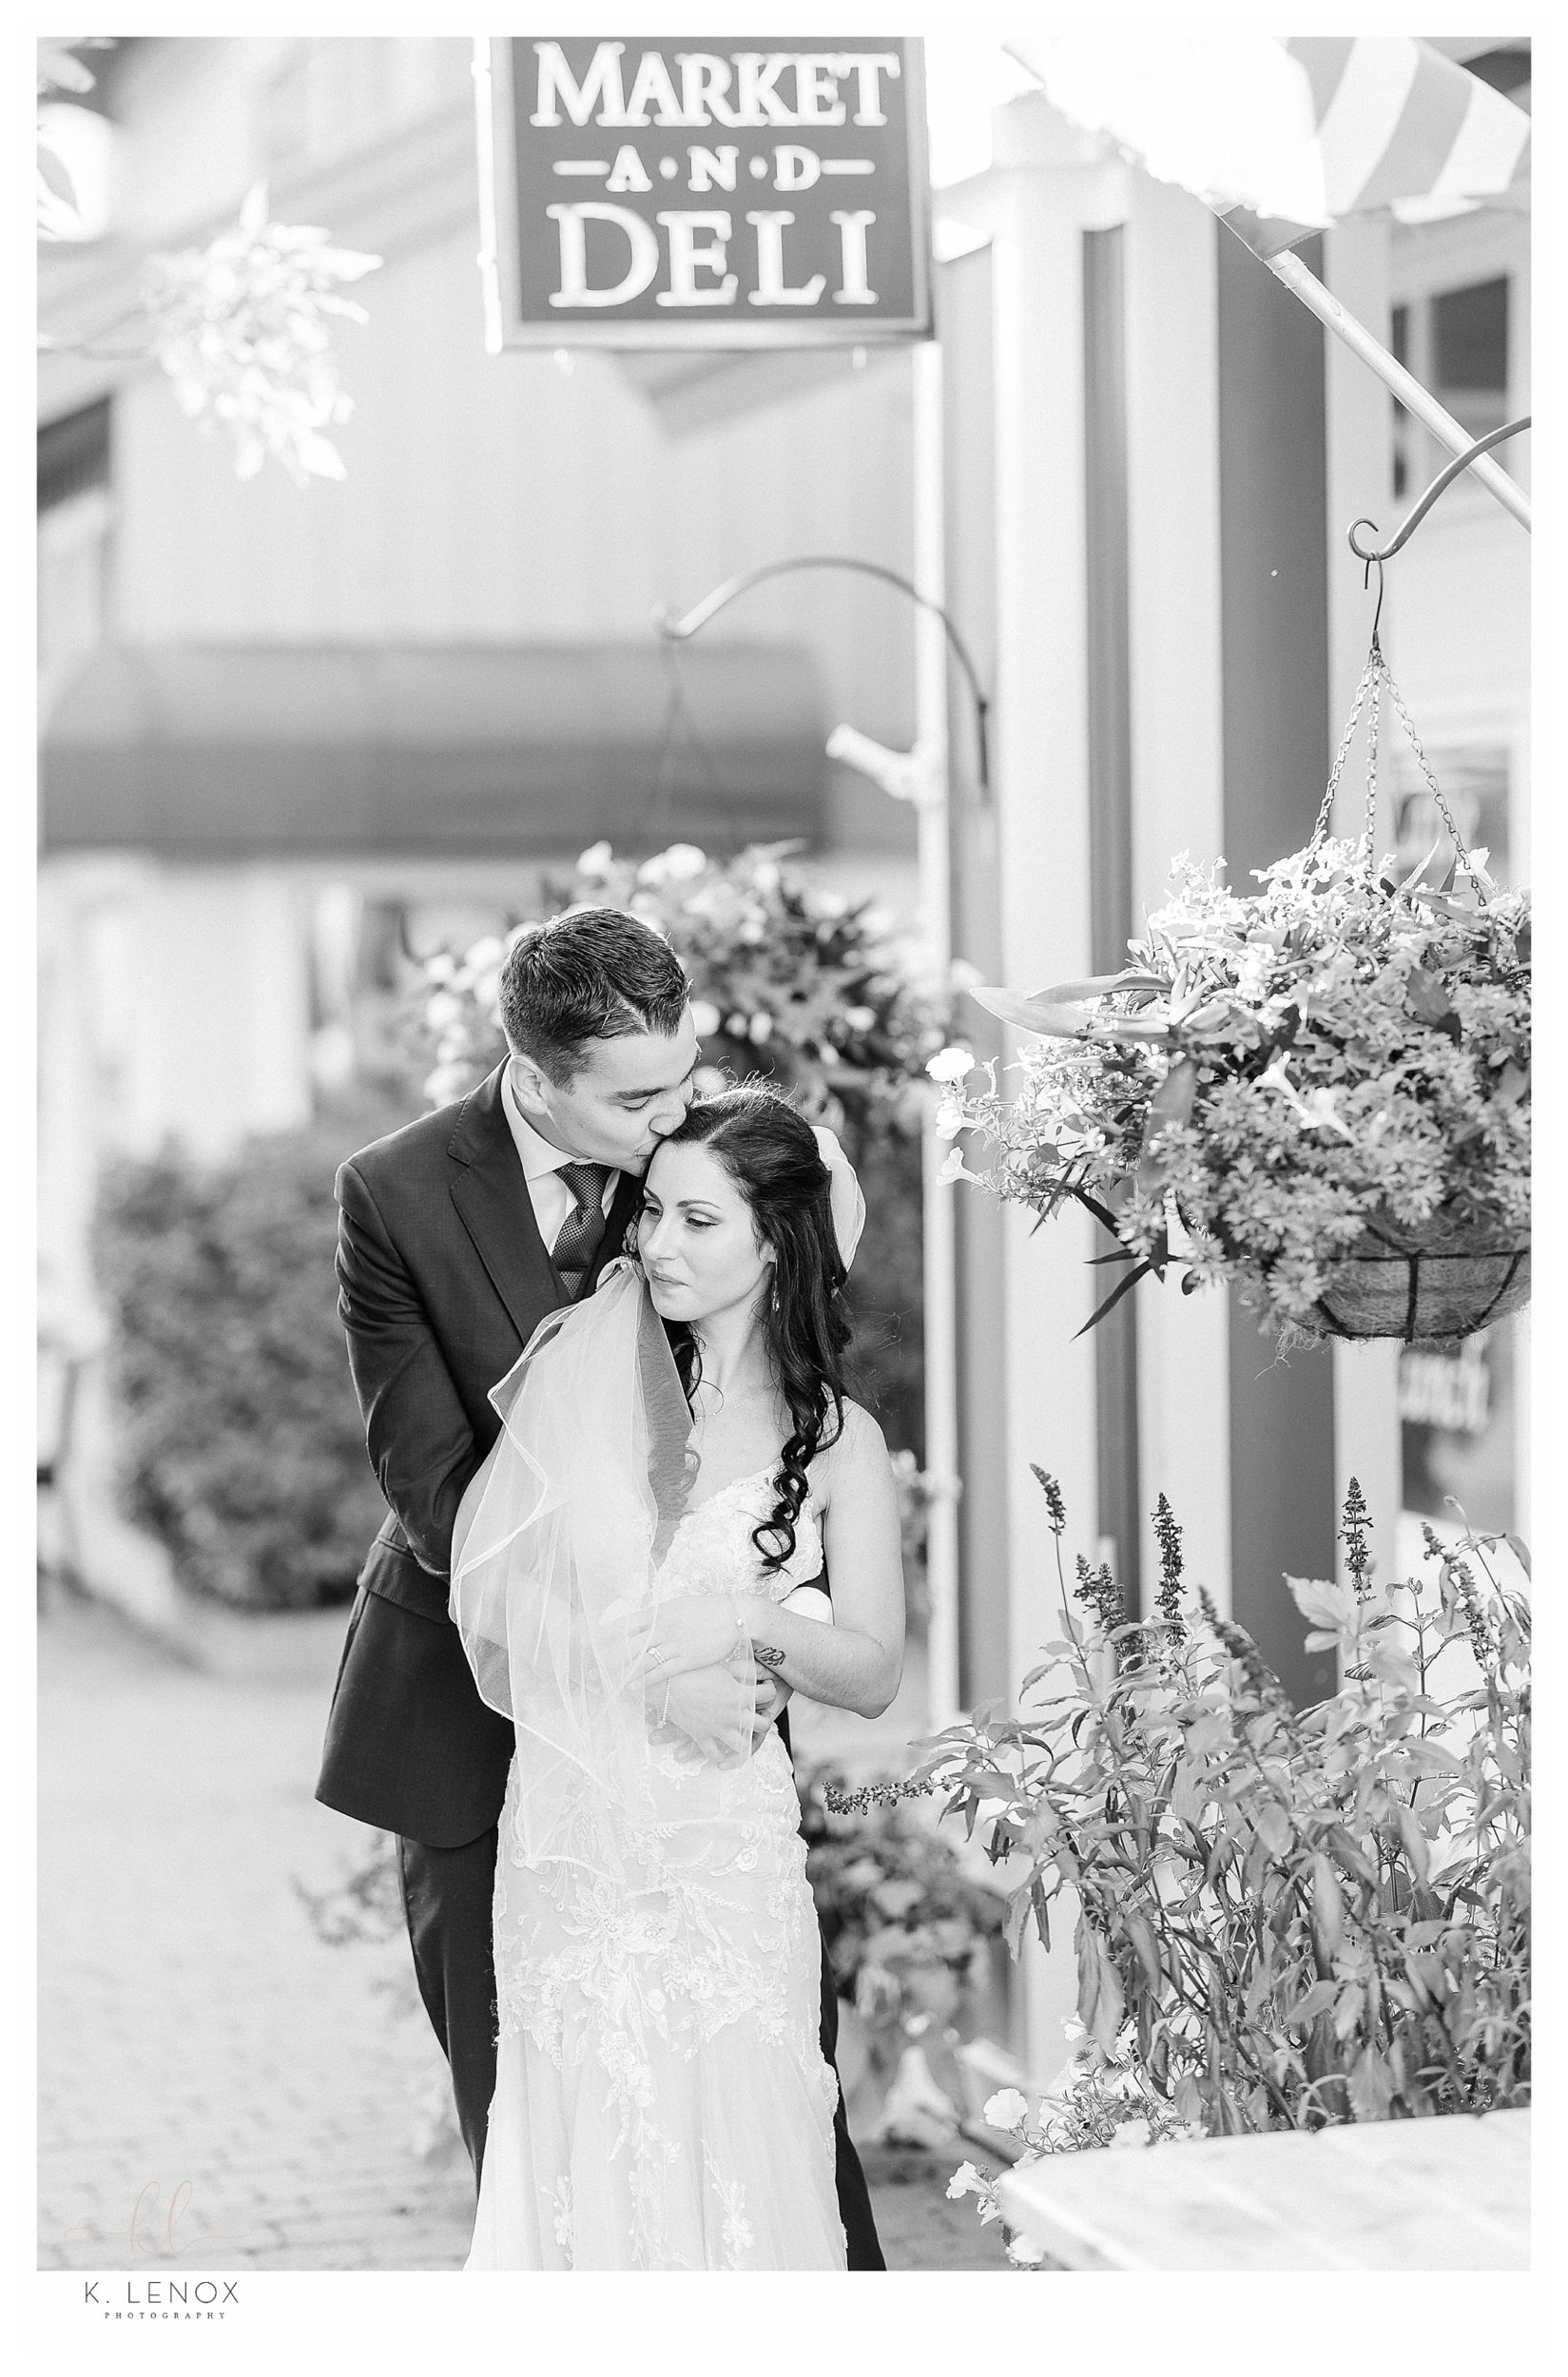 Stratton Mountain wedding k lenox photography